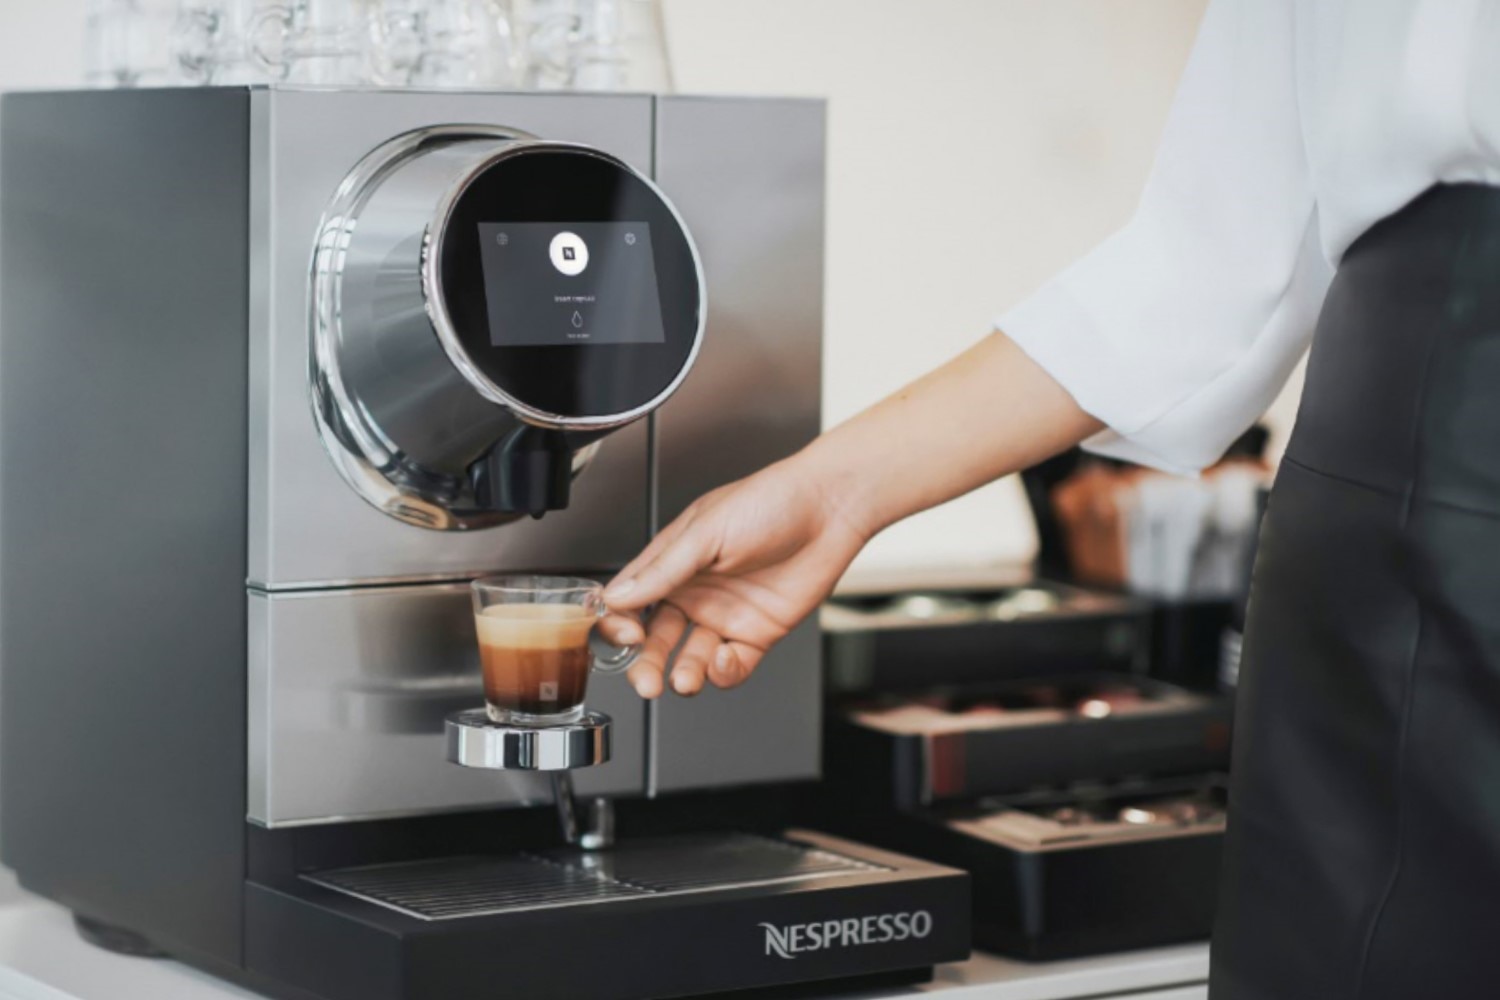 https://www.nespresso.com/shared_res/mos/free_html/sg/coffee_talks/buying-coffee-machine-body-image-2.jpg